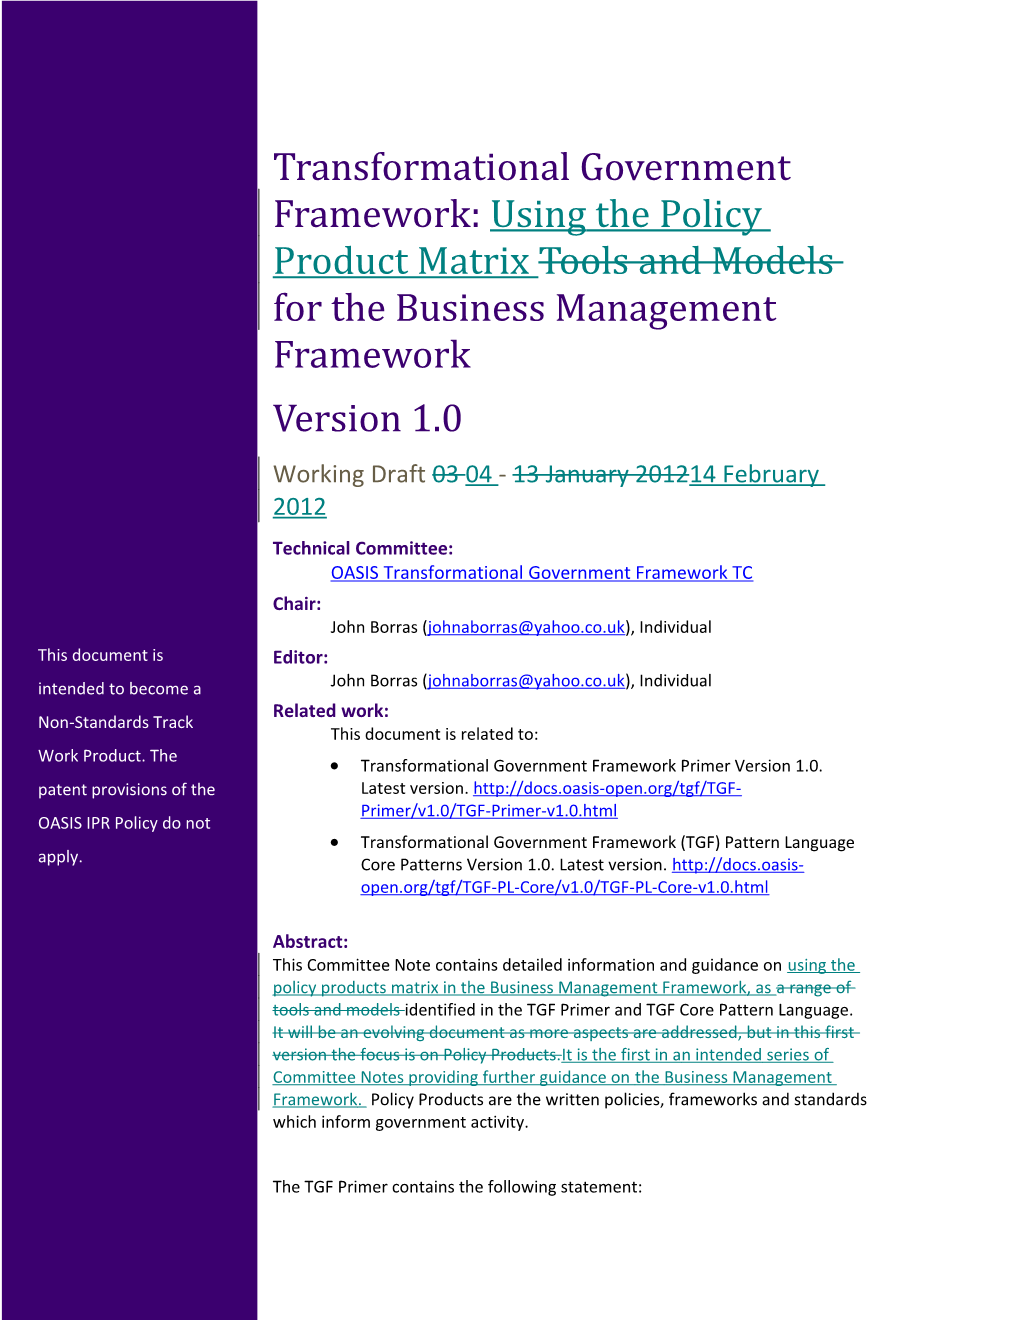 Transformational Government Framework: Tools and Models for the Business Management Framework